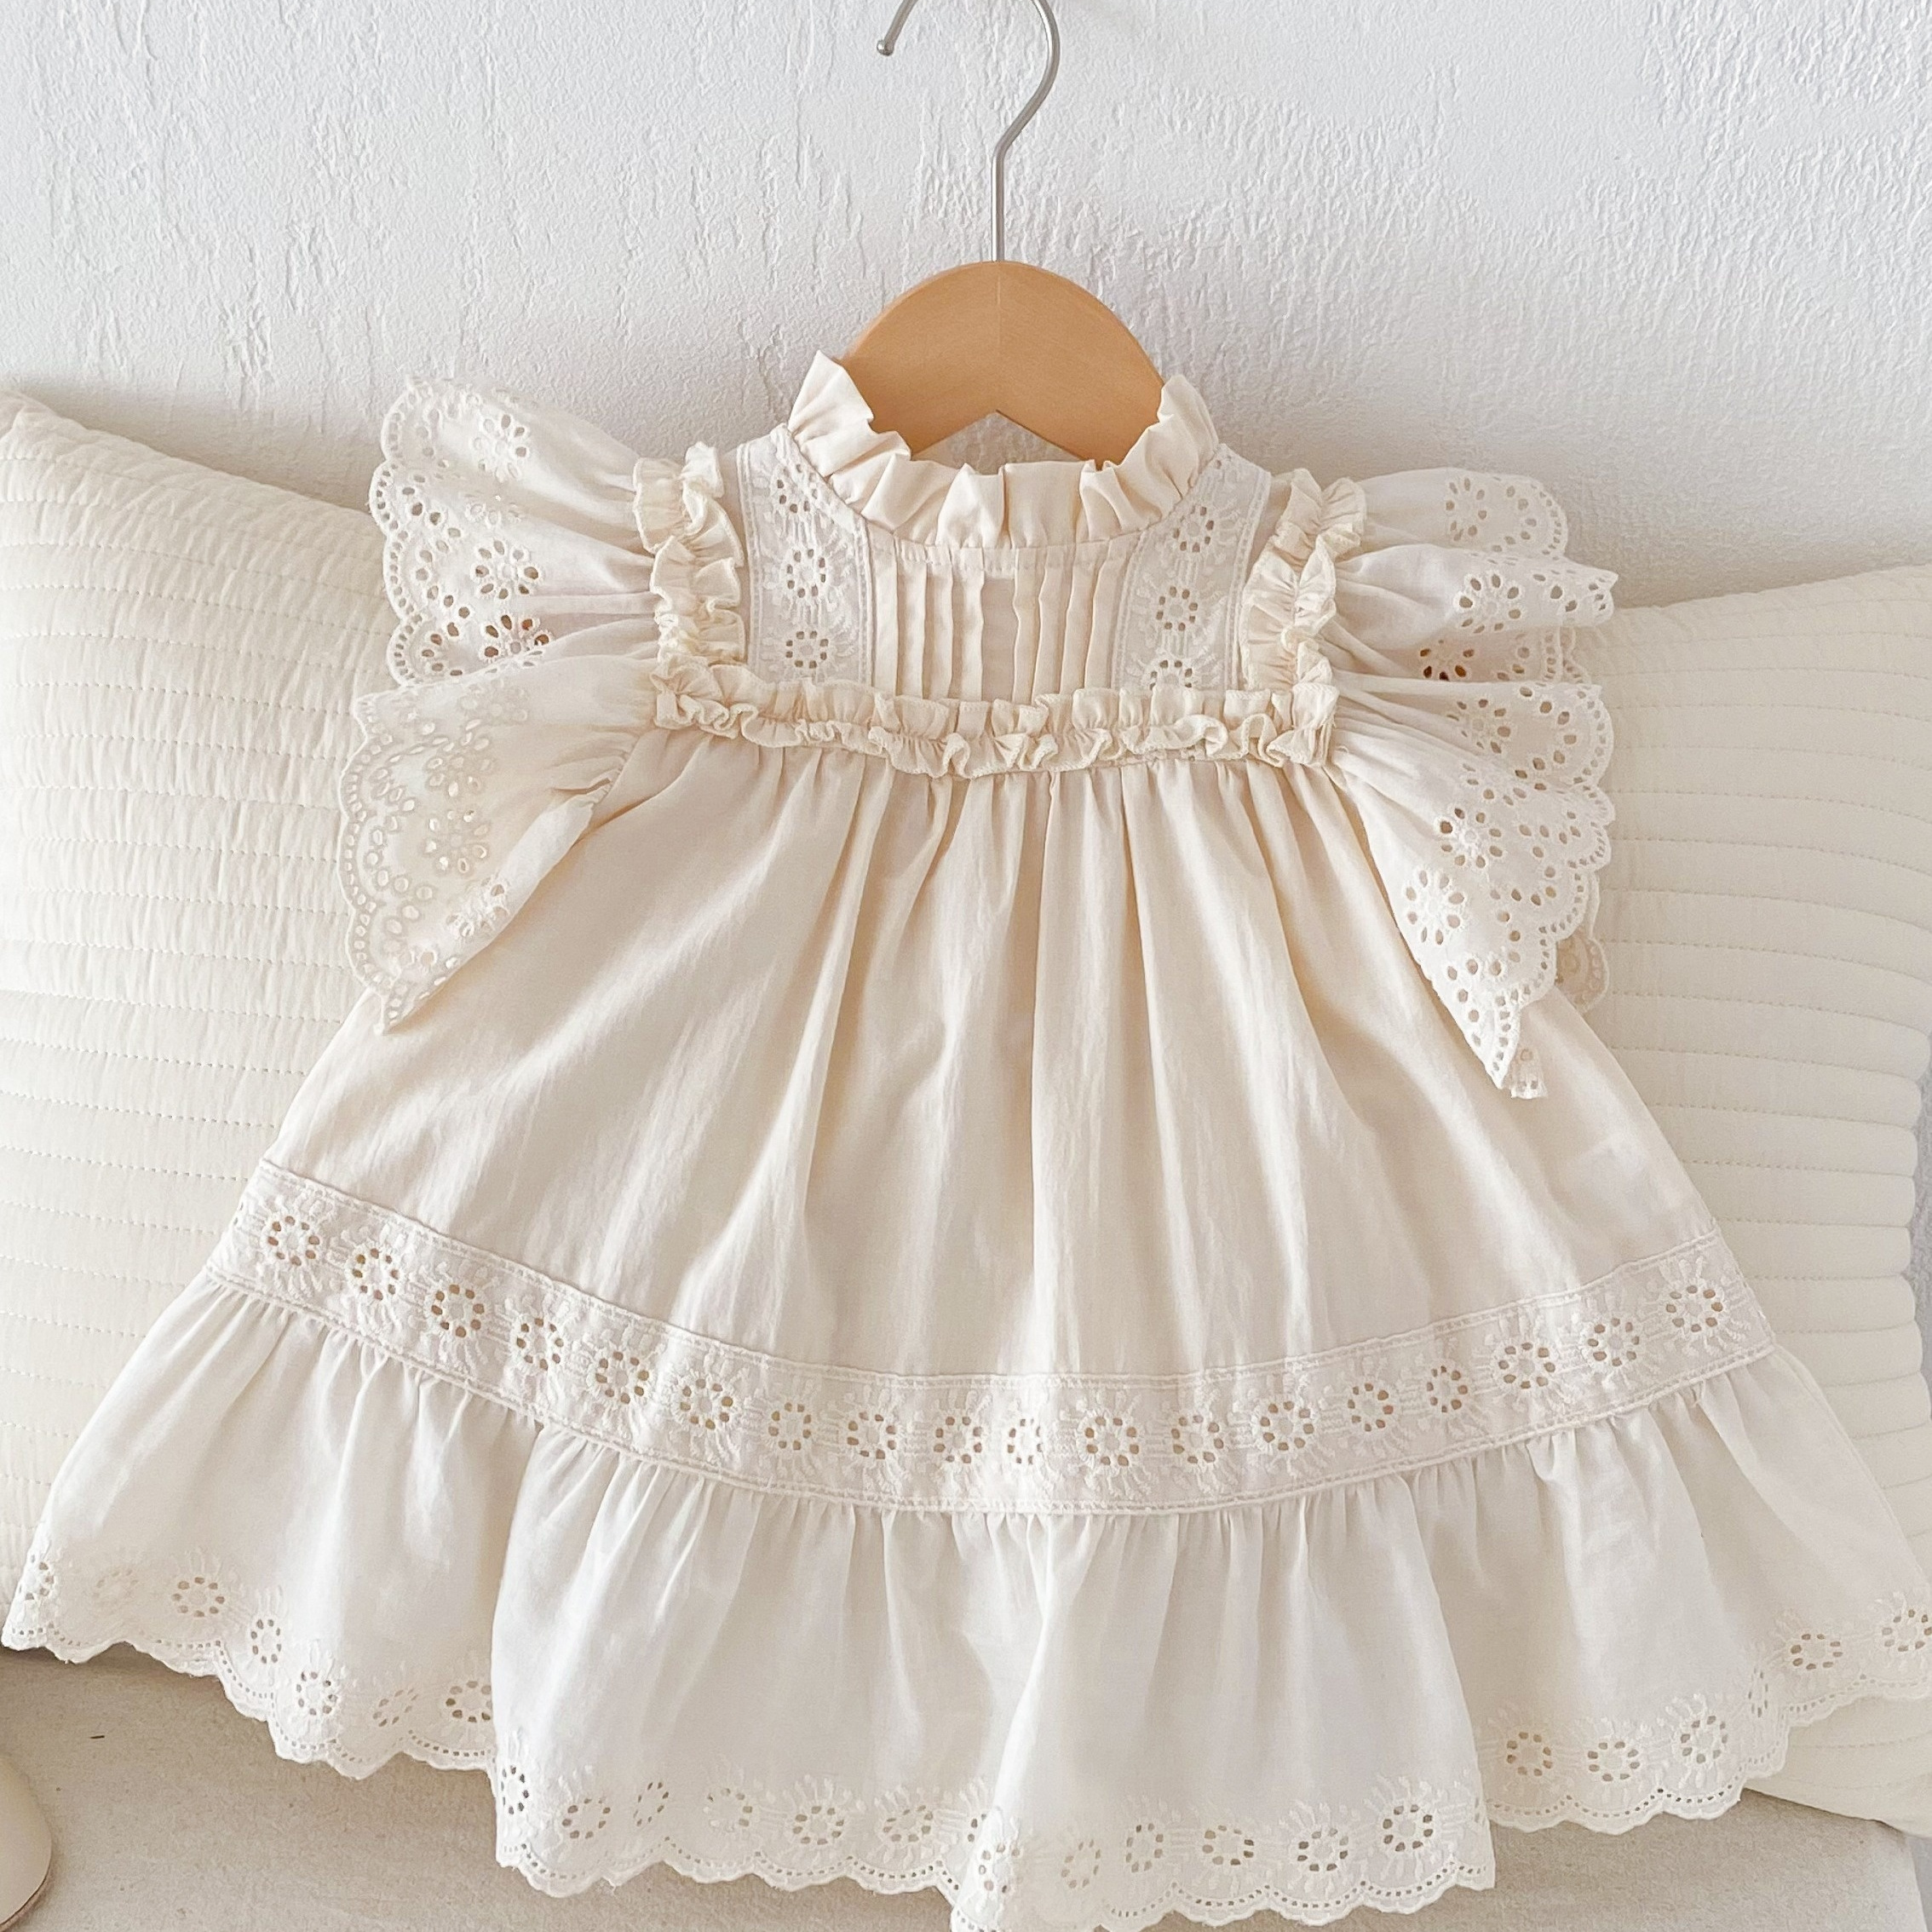 

Baby's Elegant Eyelet Embroidered Cap Sleeve Dress, Mock Neck Comfy Cotton Dress, Infant & Toddler Girl's Clothing For Summer/spring, As Gift